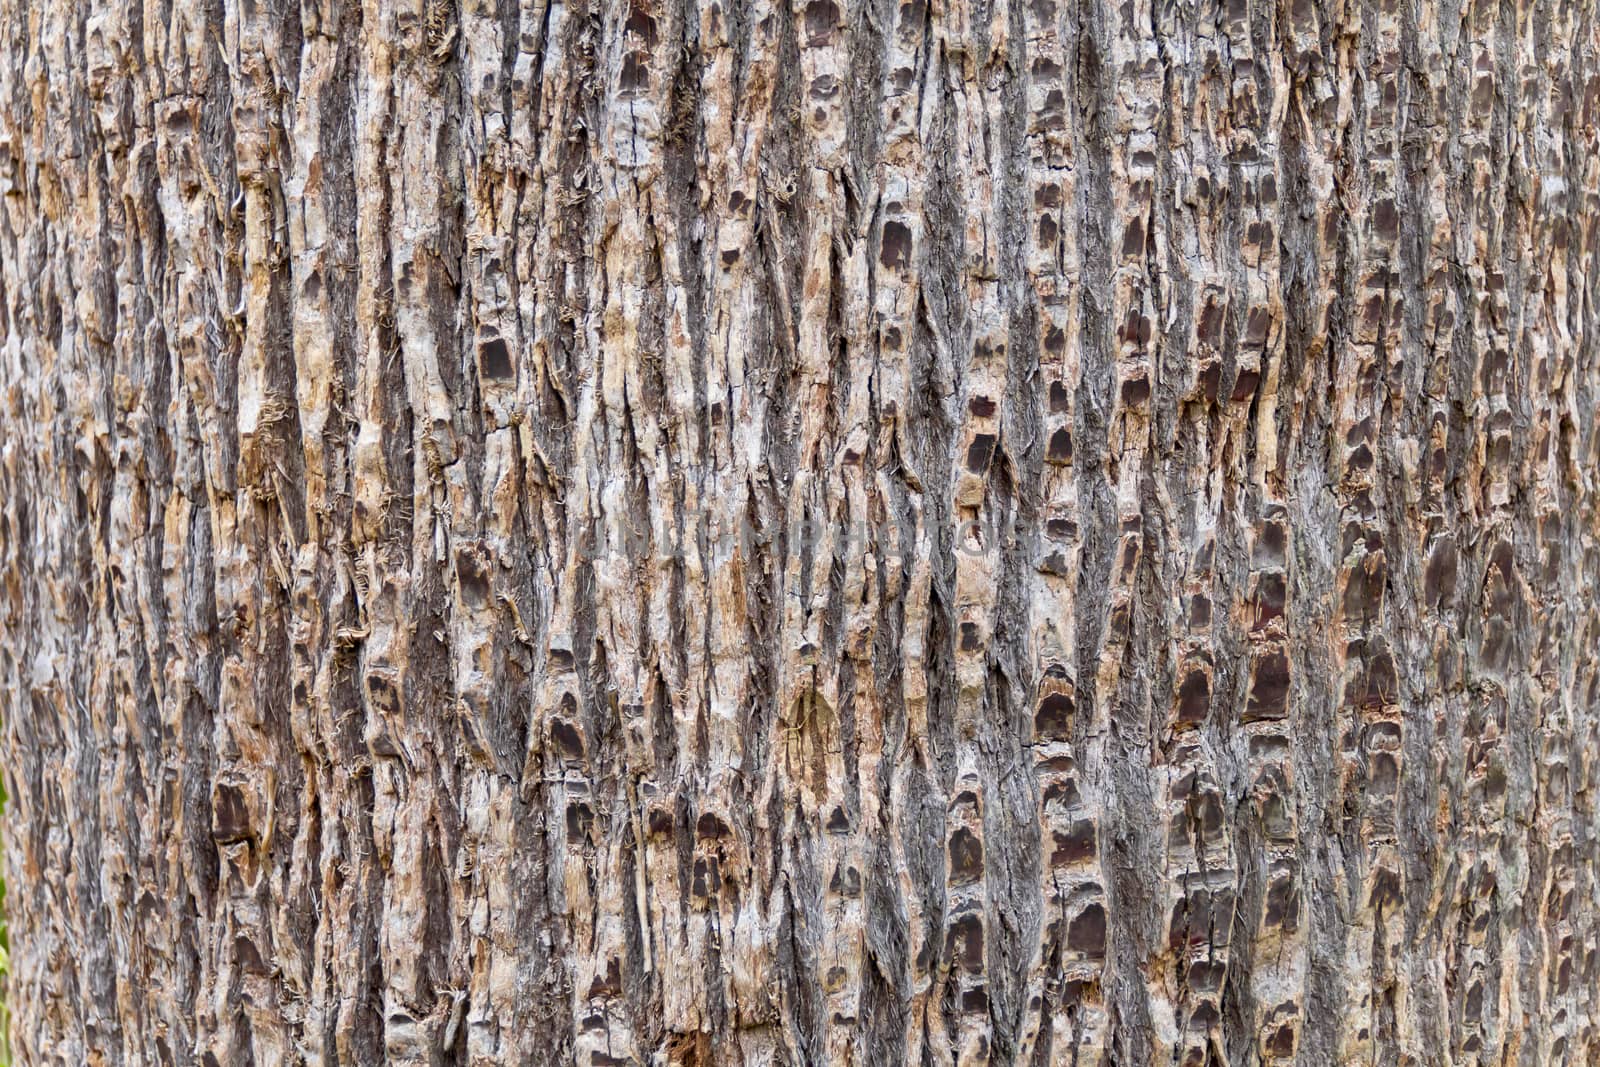 Horizontal photo of the brown texture stem tree